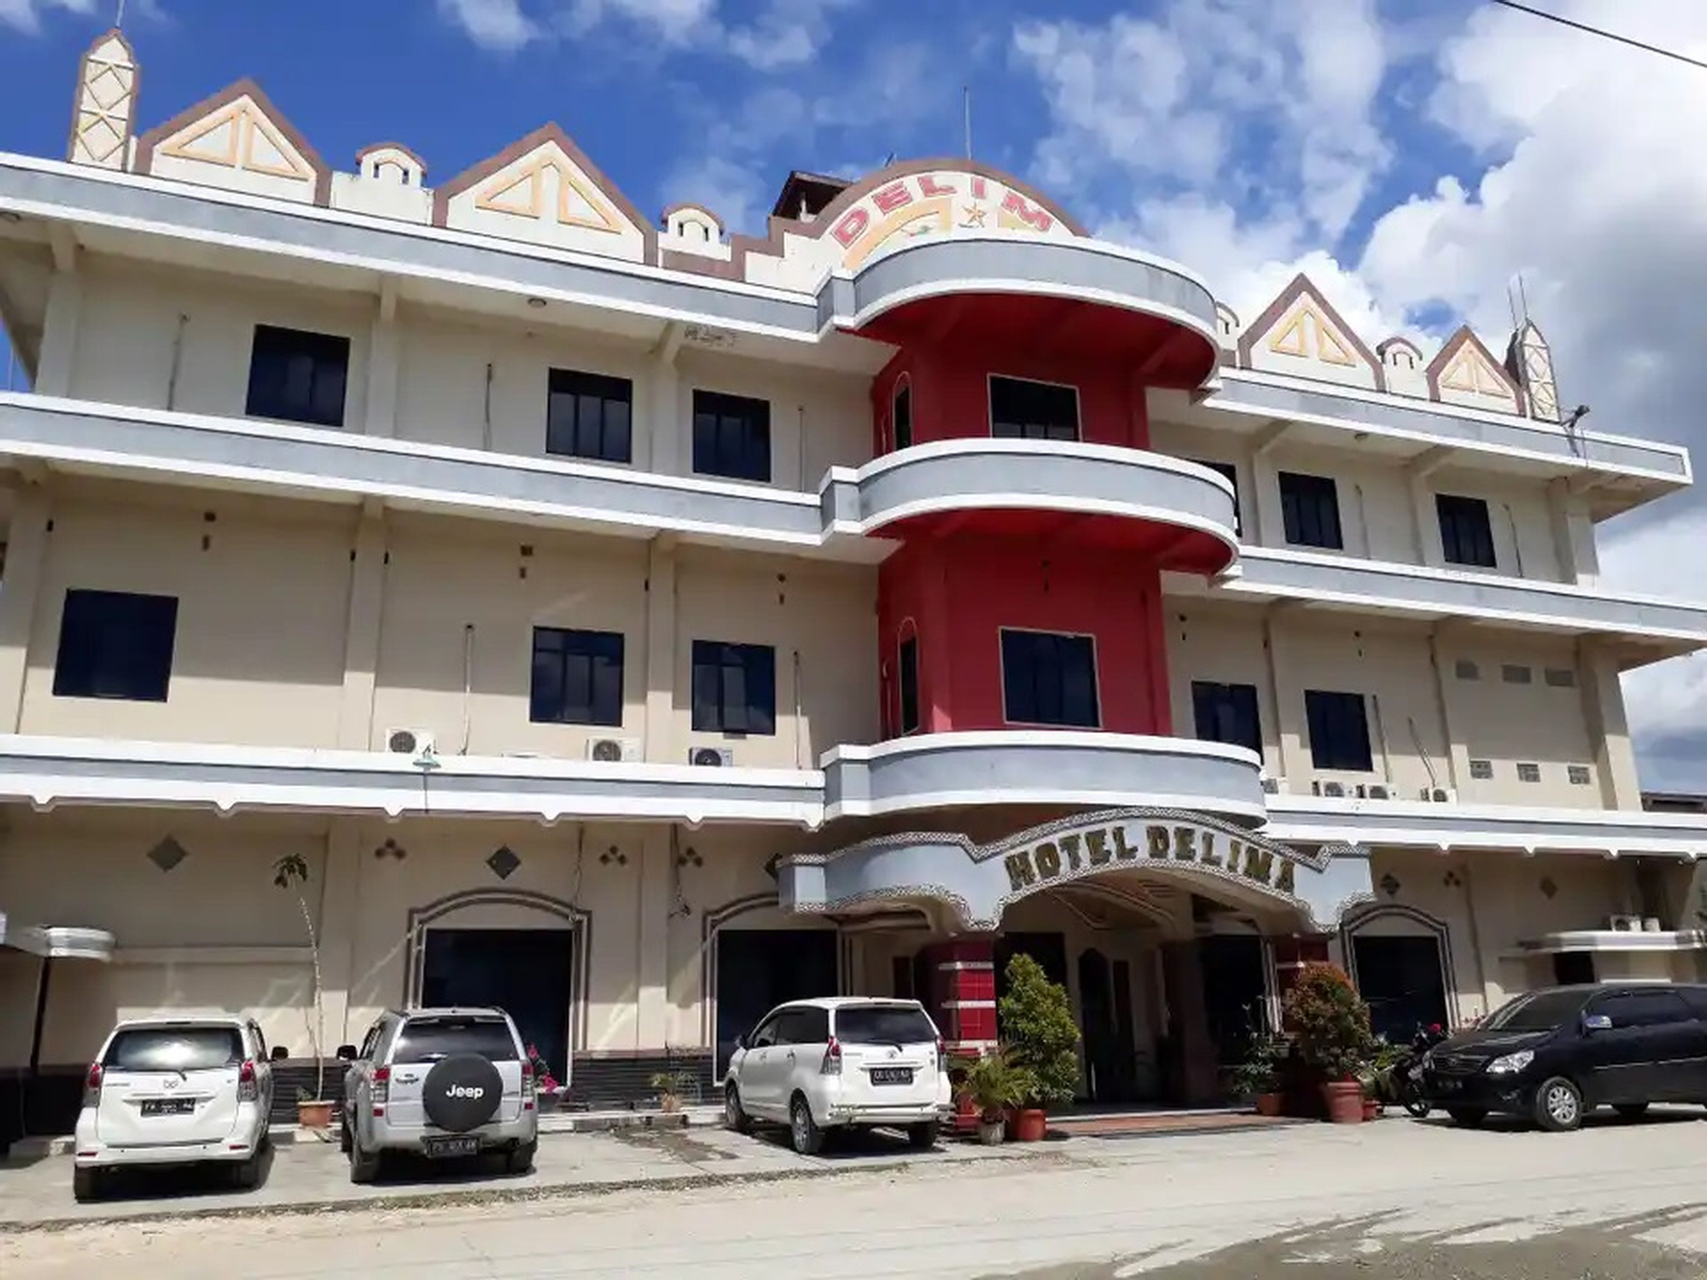 Exterior & Views 2, Hotel Delima, Jayapura